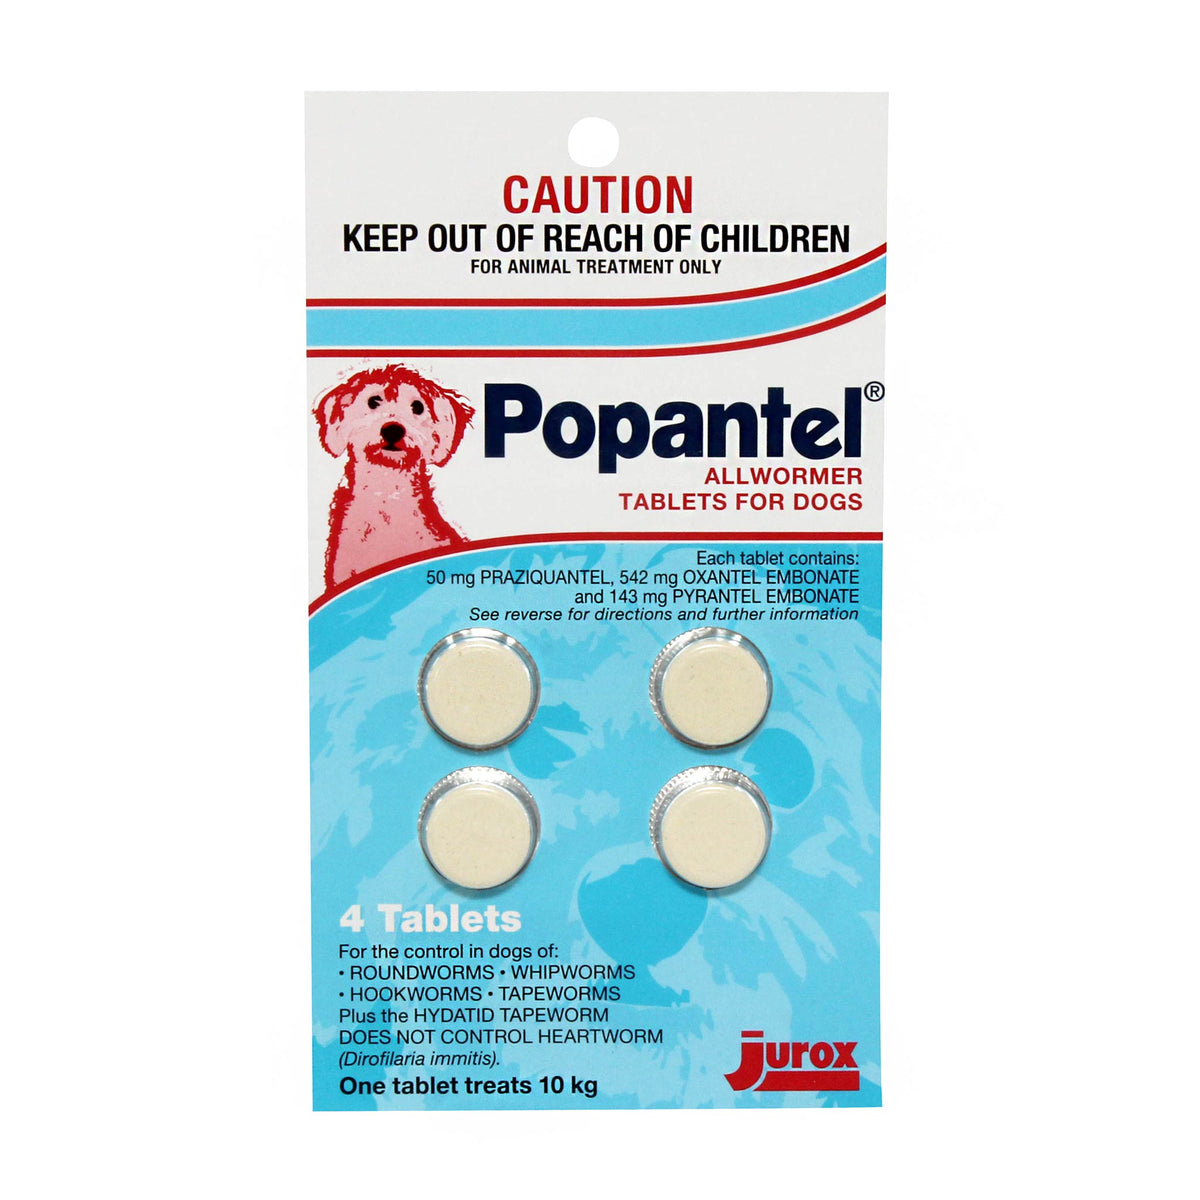 Popantel Allwormer for Dogs 10kg - 4 Tablets